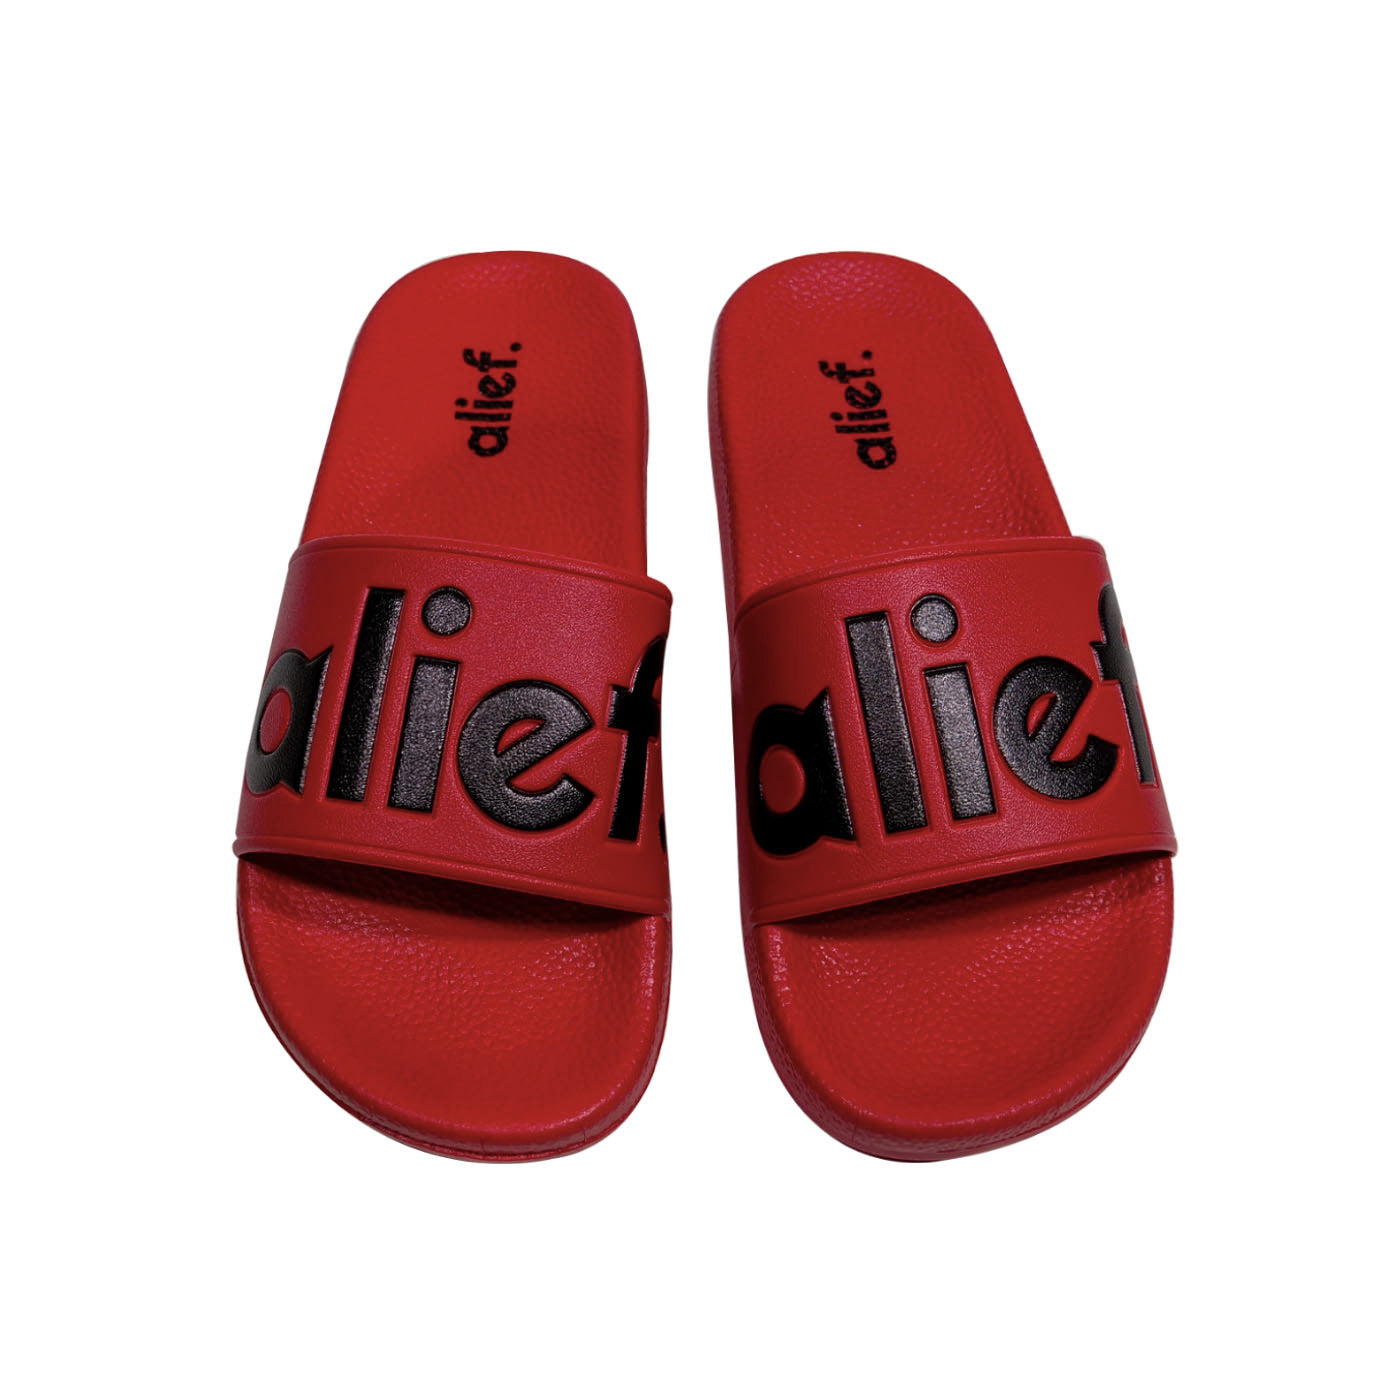 Alief Slides - Red/Black